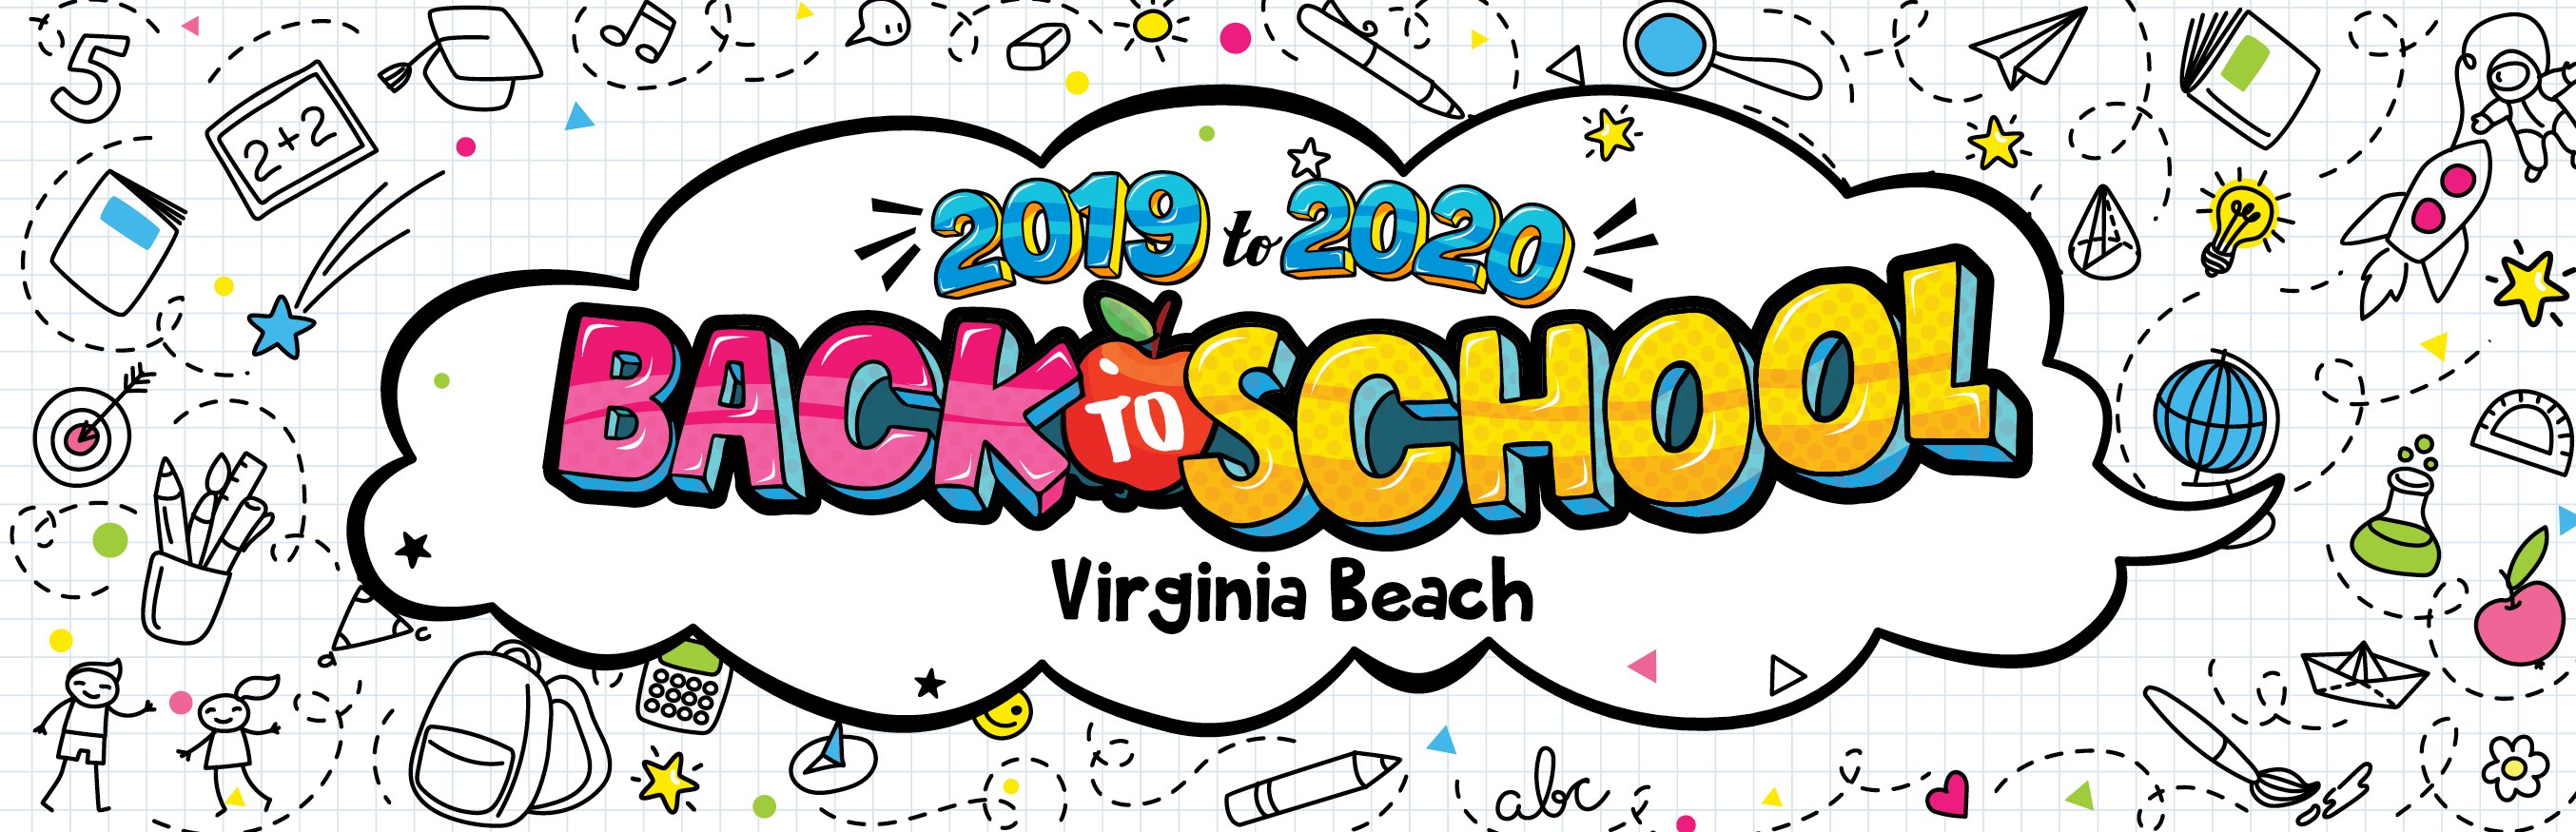 2019 2020 School Calendar Virginia Beach